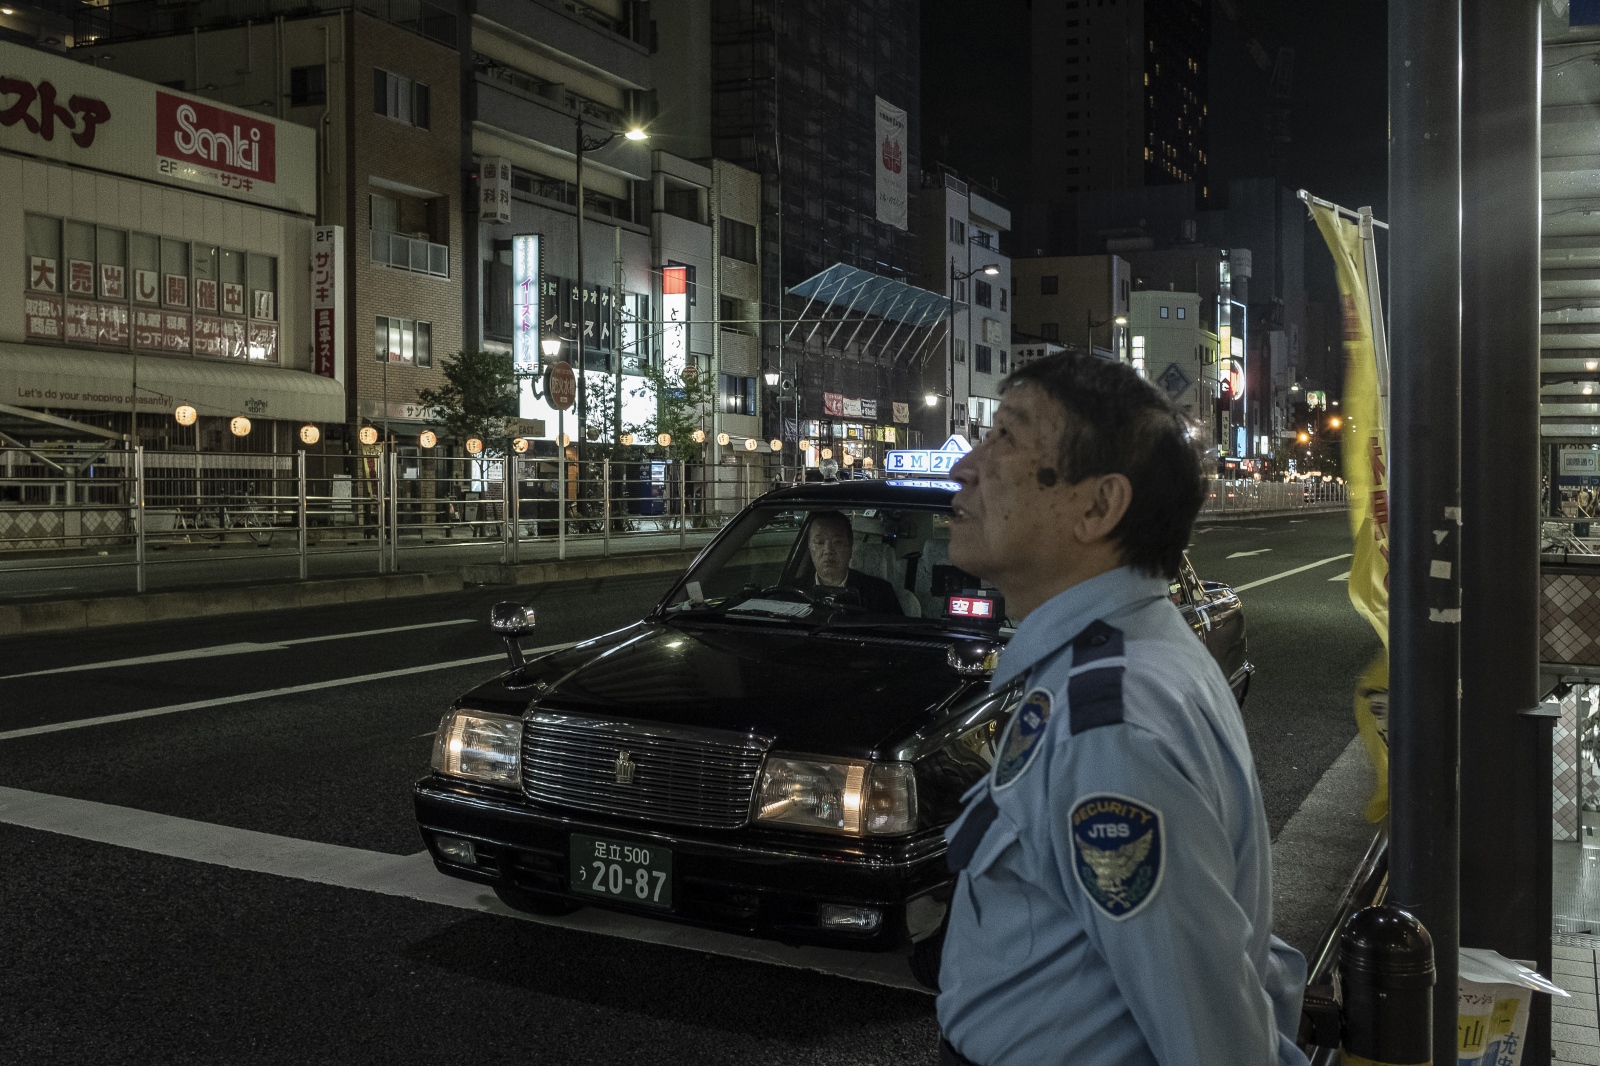  Asakusa, Tokyo, Japan. May 10th_(Valentin Bianchi | Hans Lucas) 